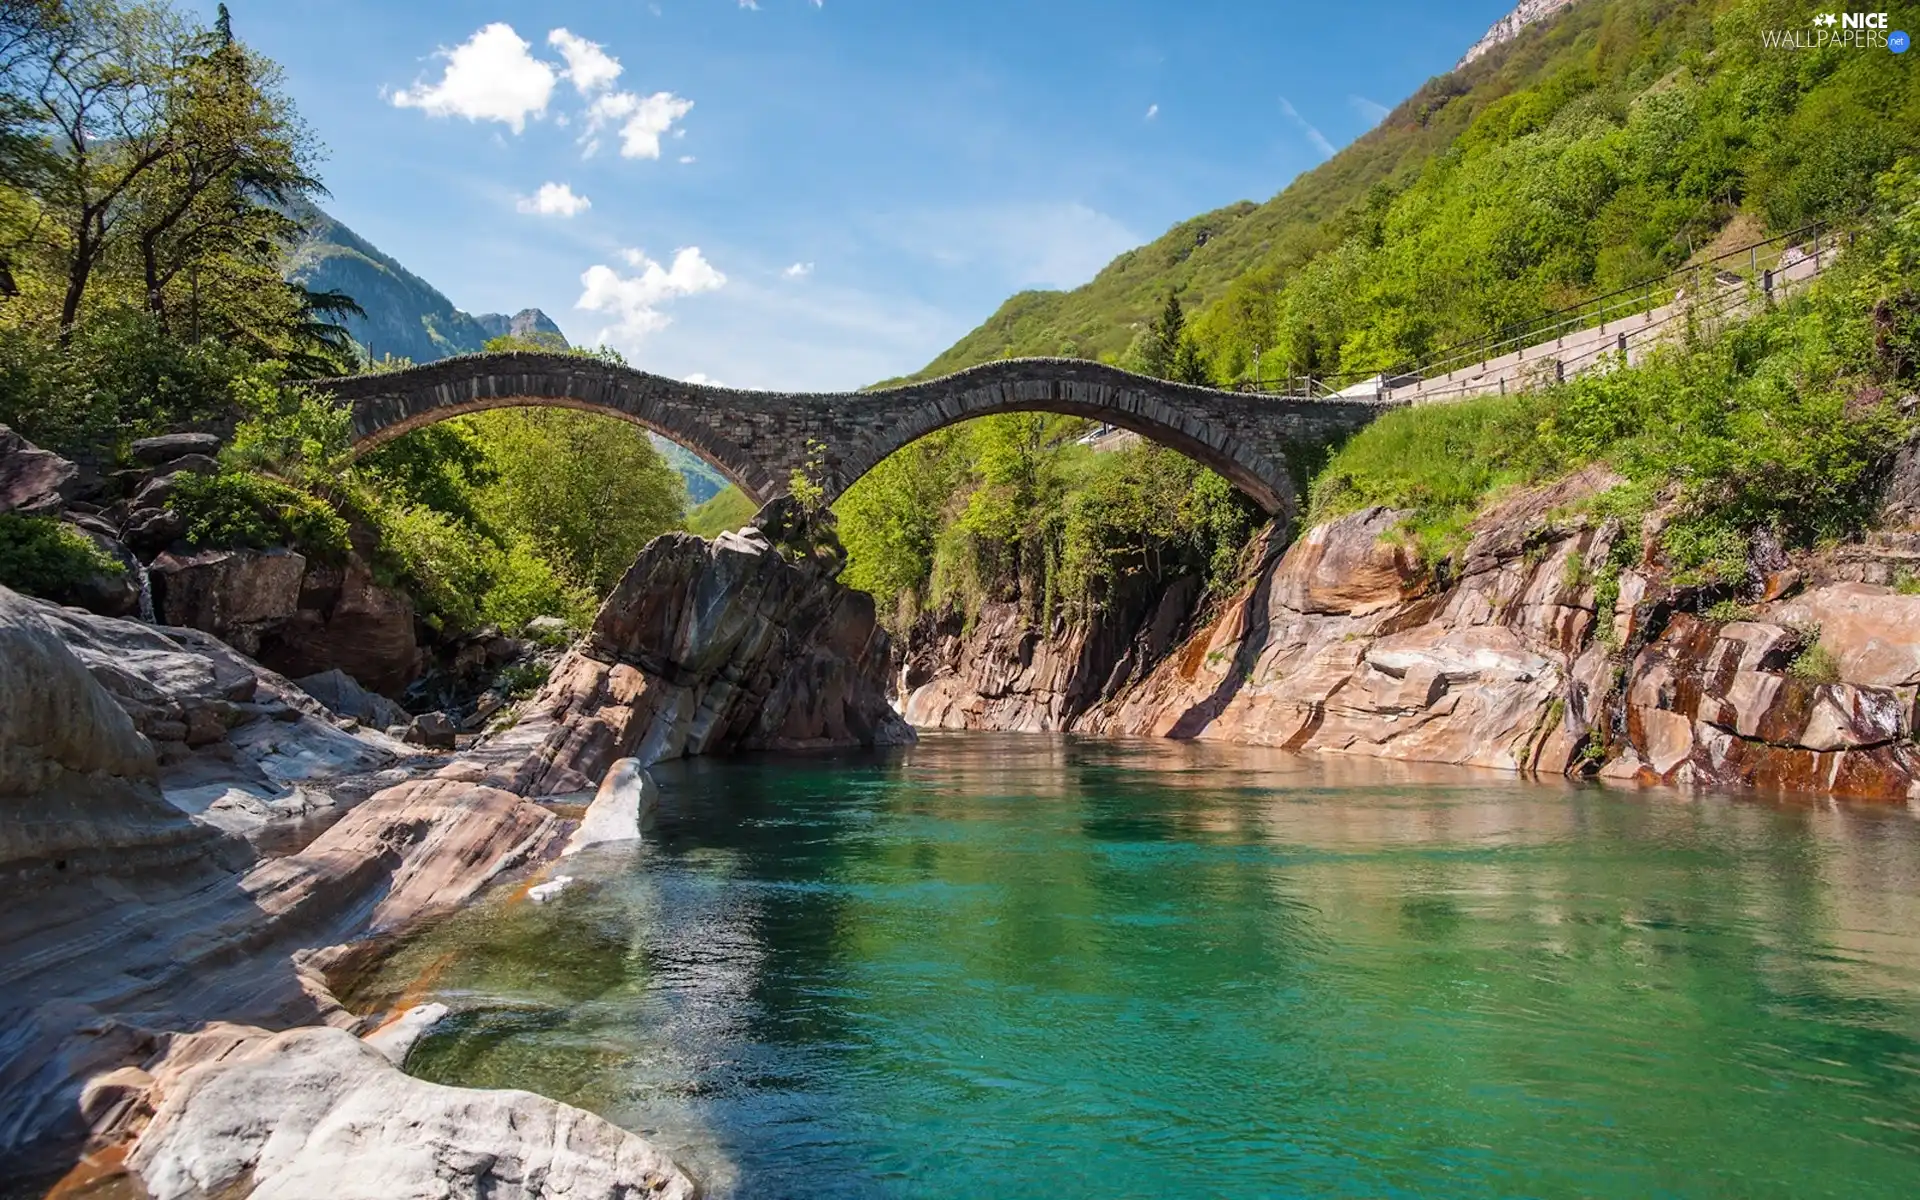 Verzasca, Lavertezzo, stone, bridge, Switzerland, River